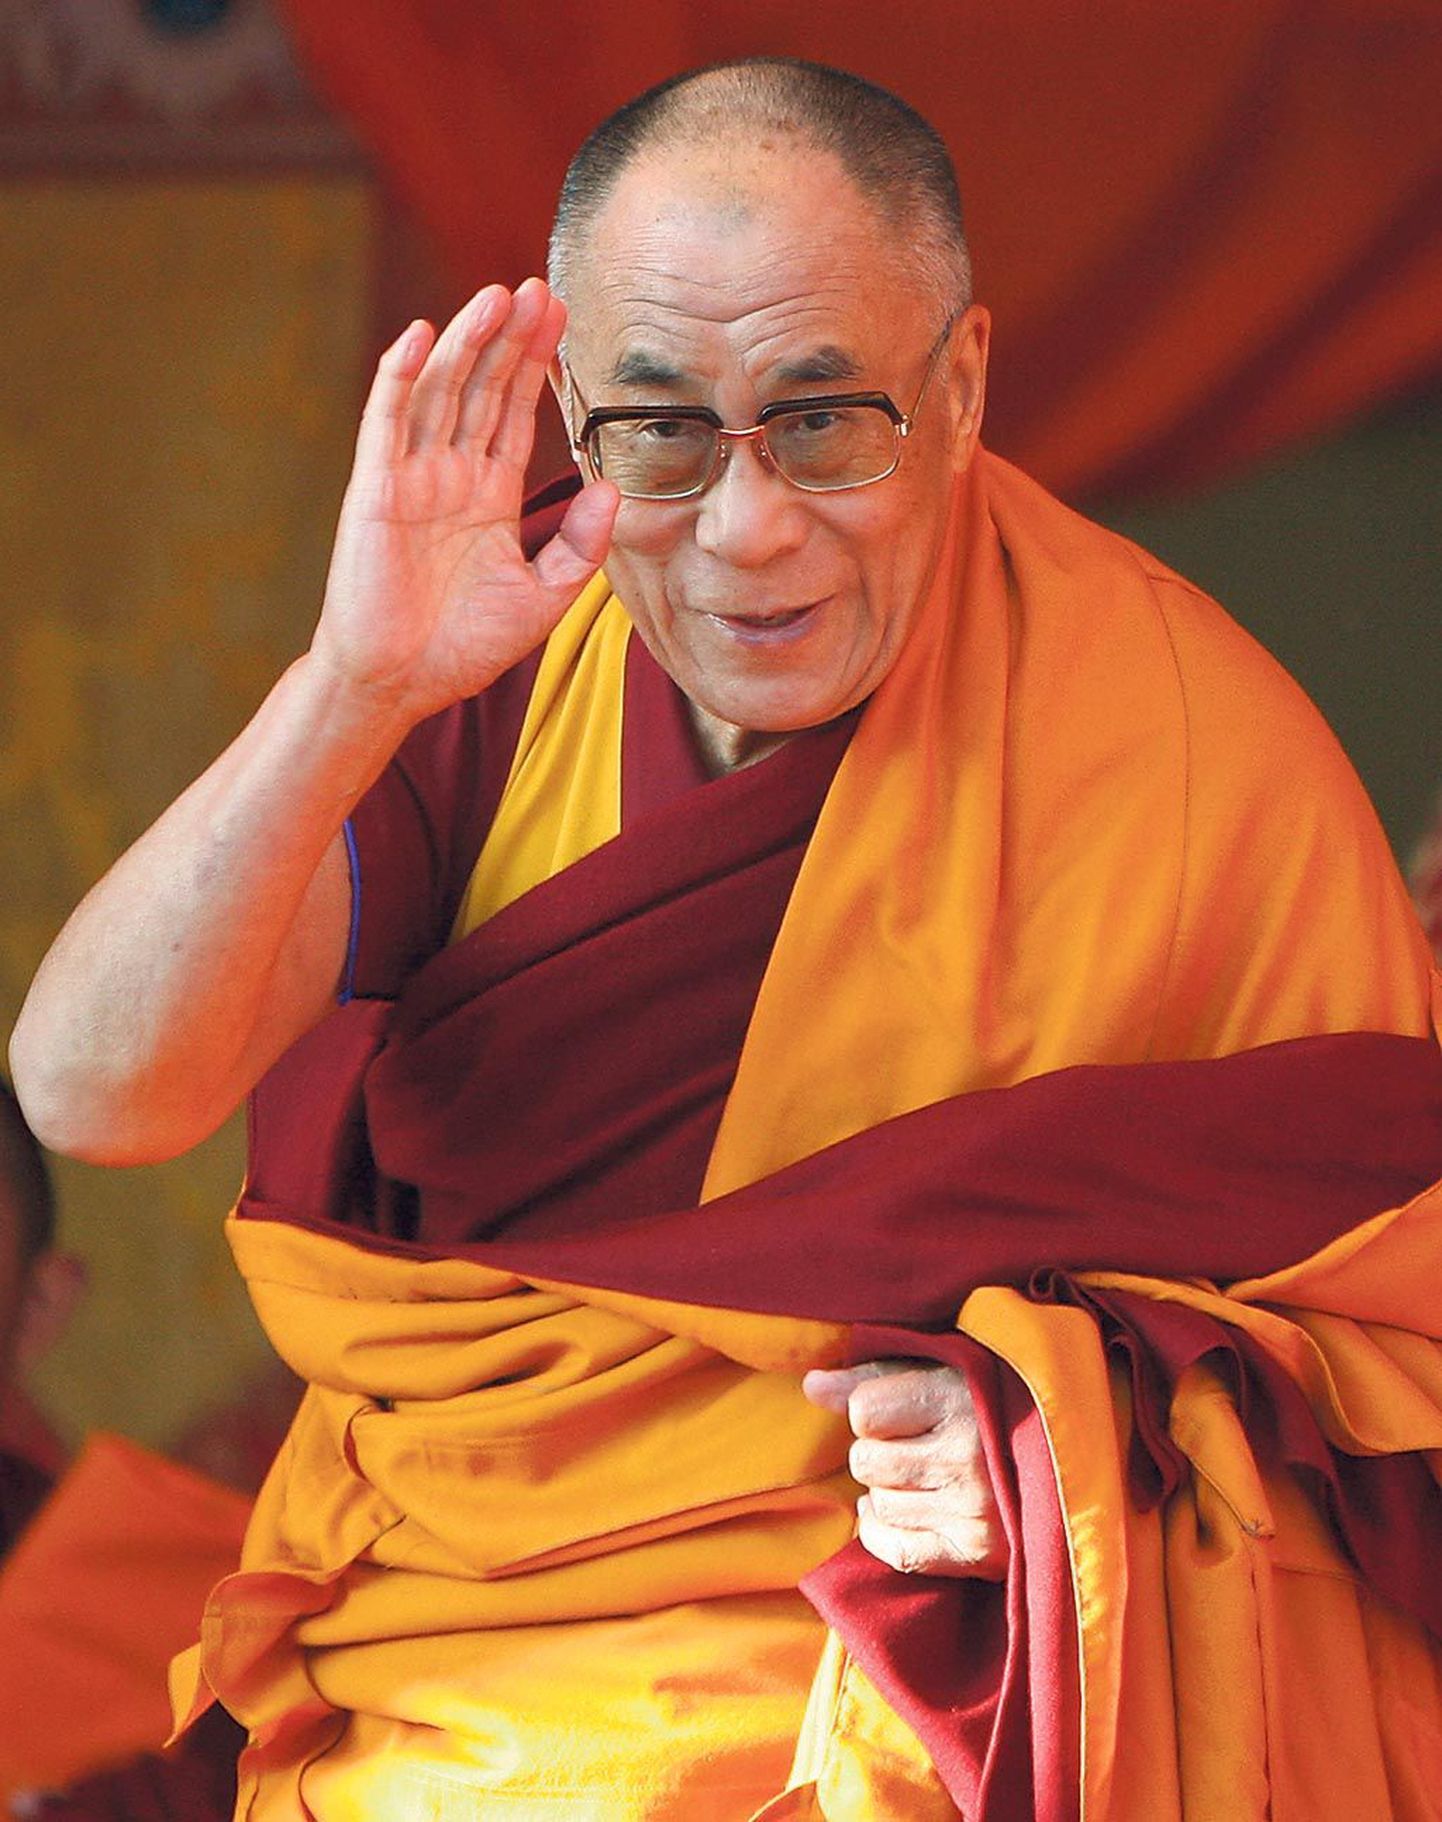 Tiibeti usujuht dalai-laama Tenzin Gjatso.